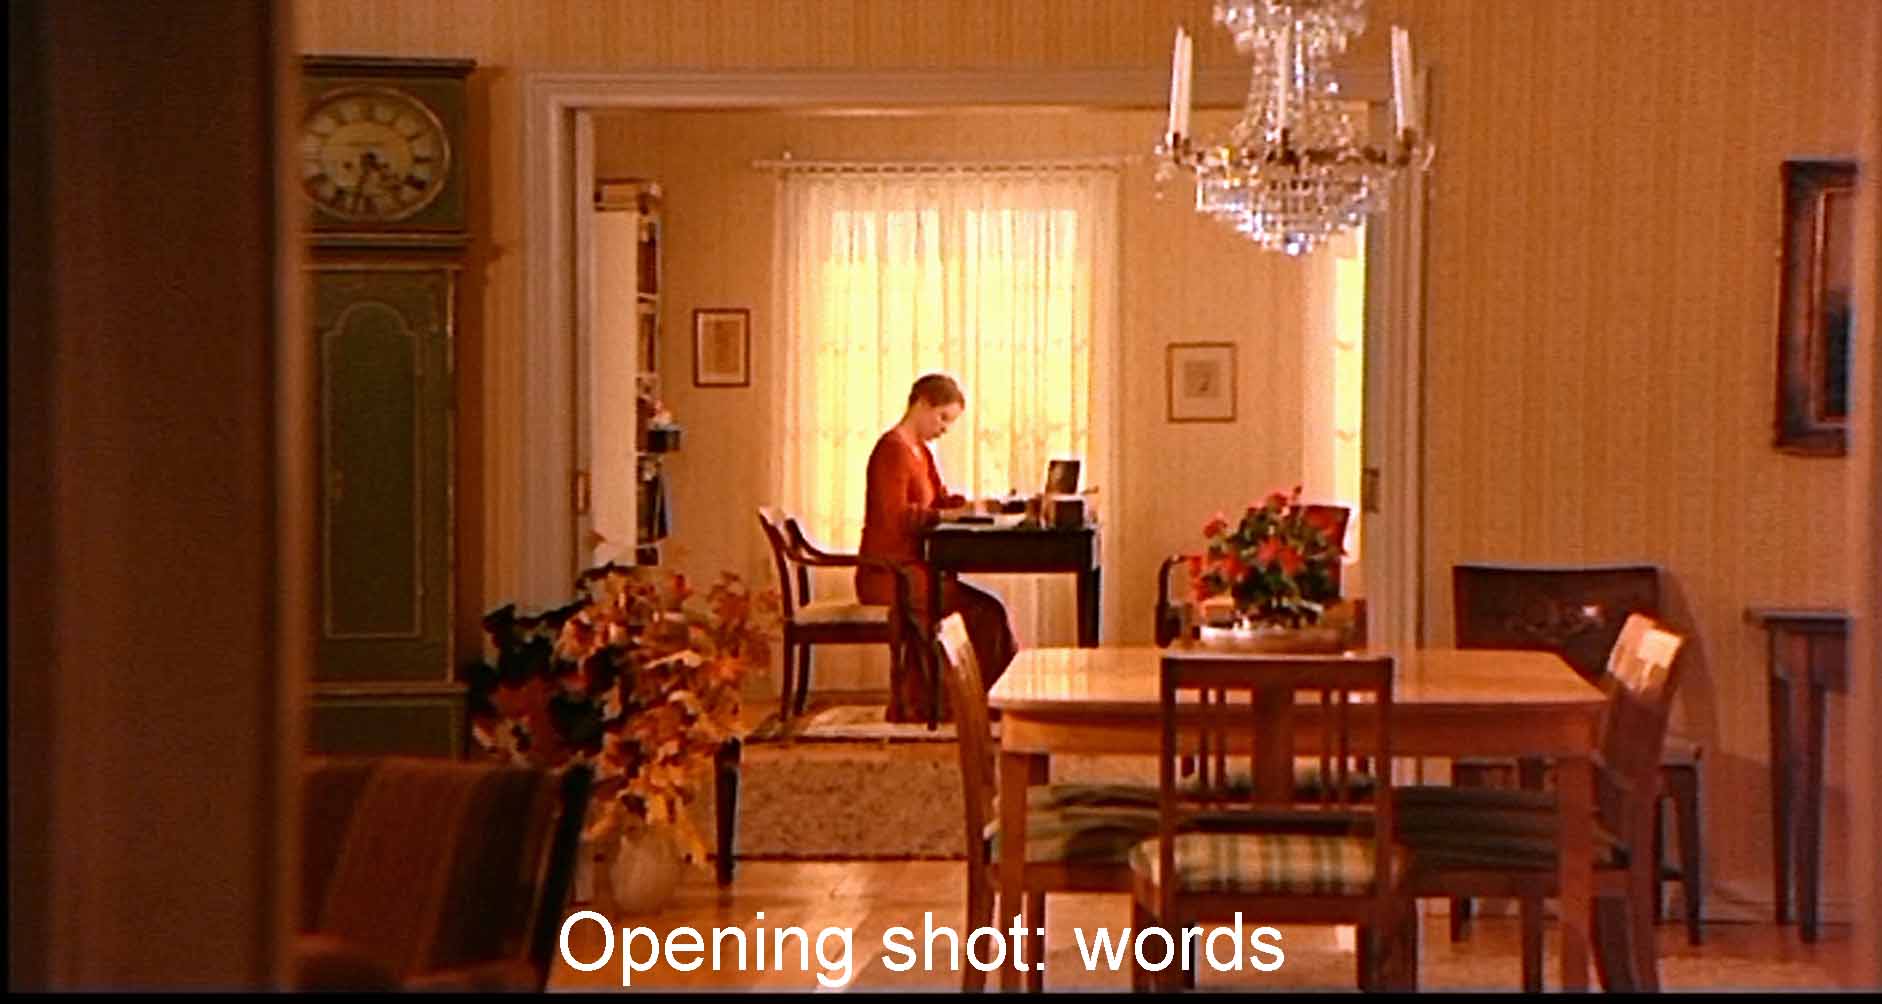 Opening shot: words